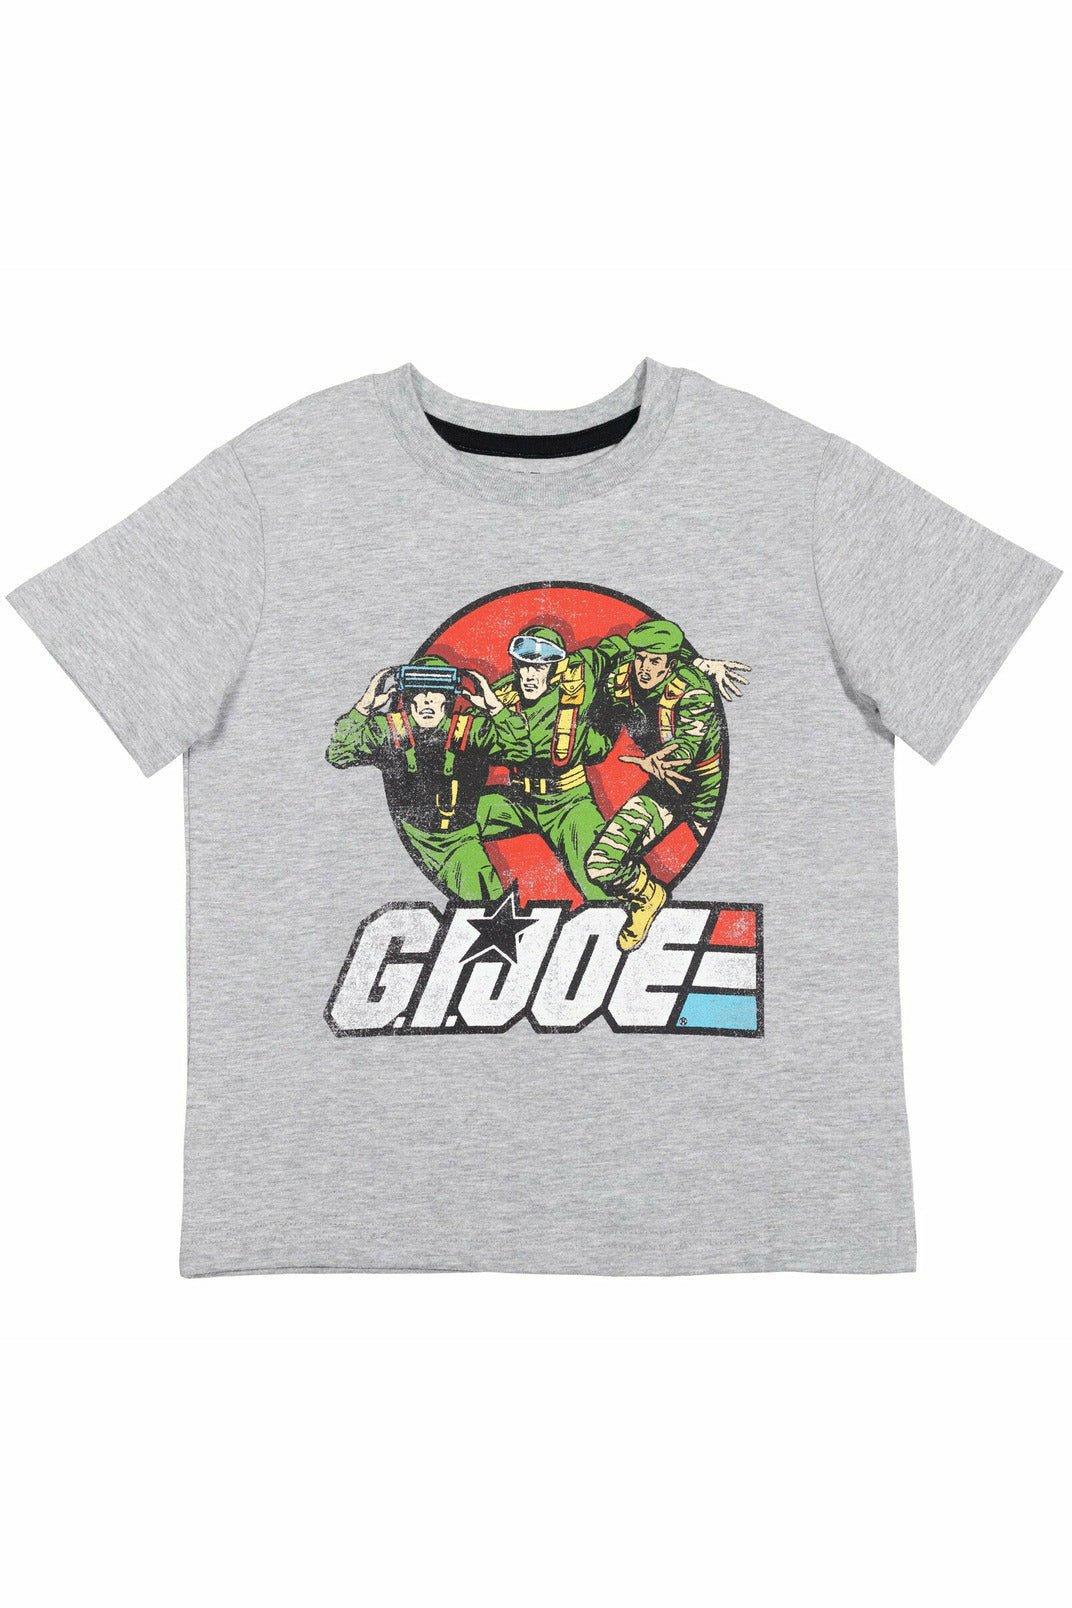 G.I. Joe 2 Pack Graphic T-Shirt - imagikids